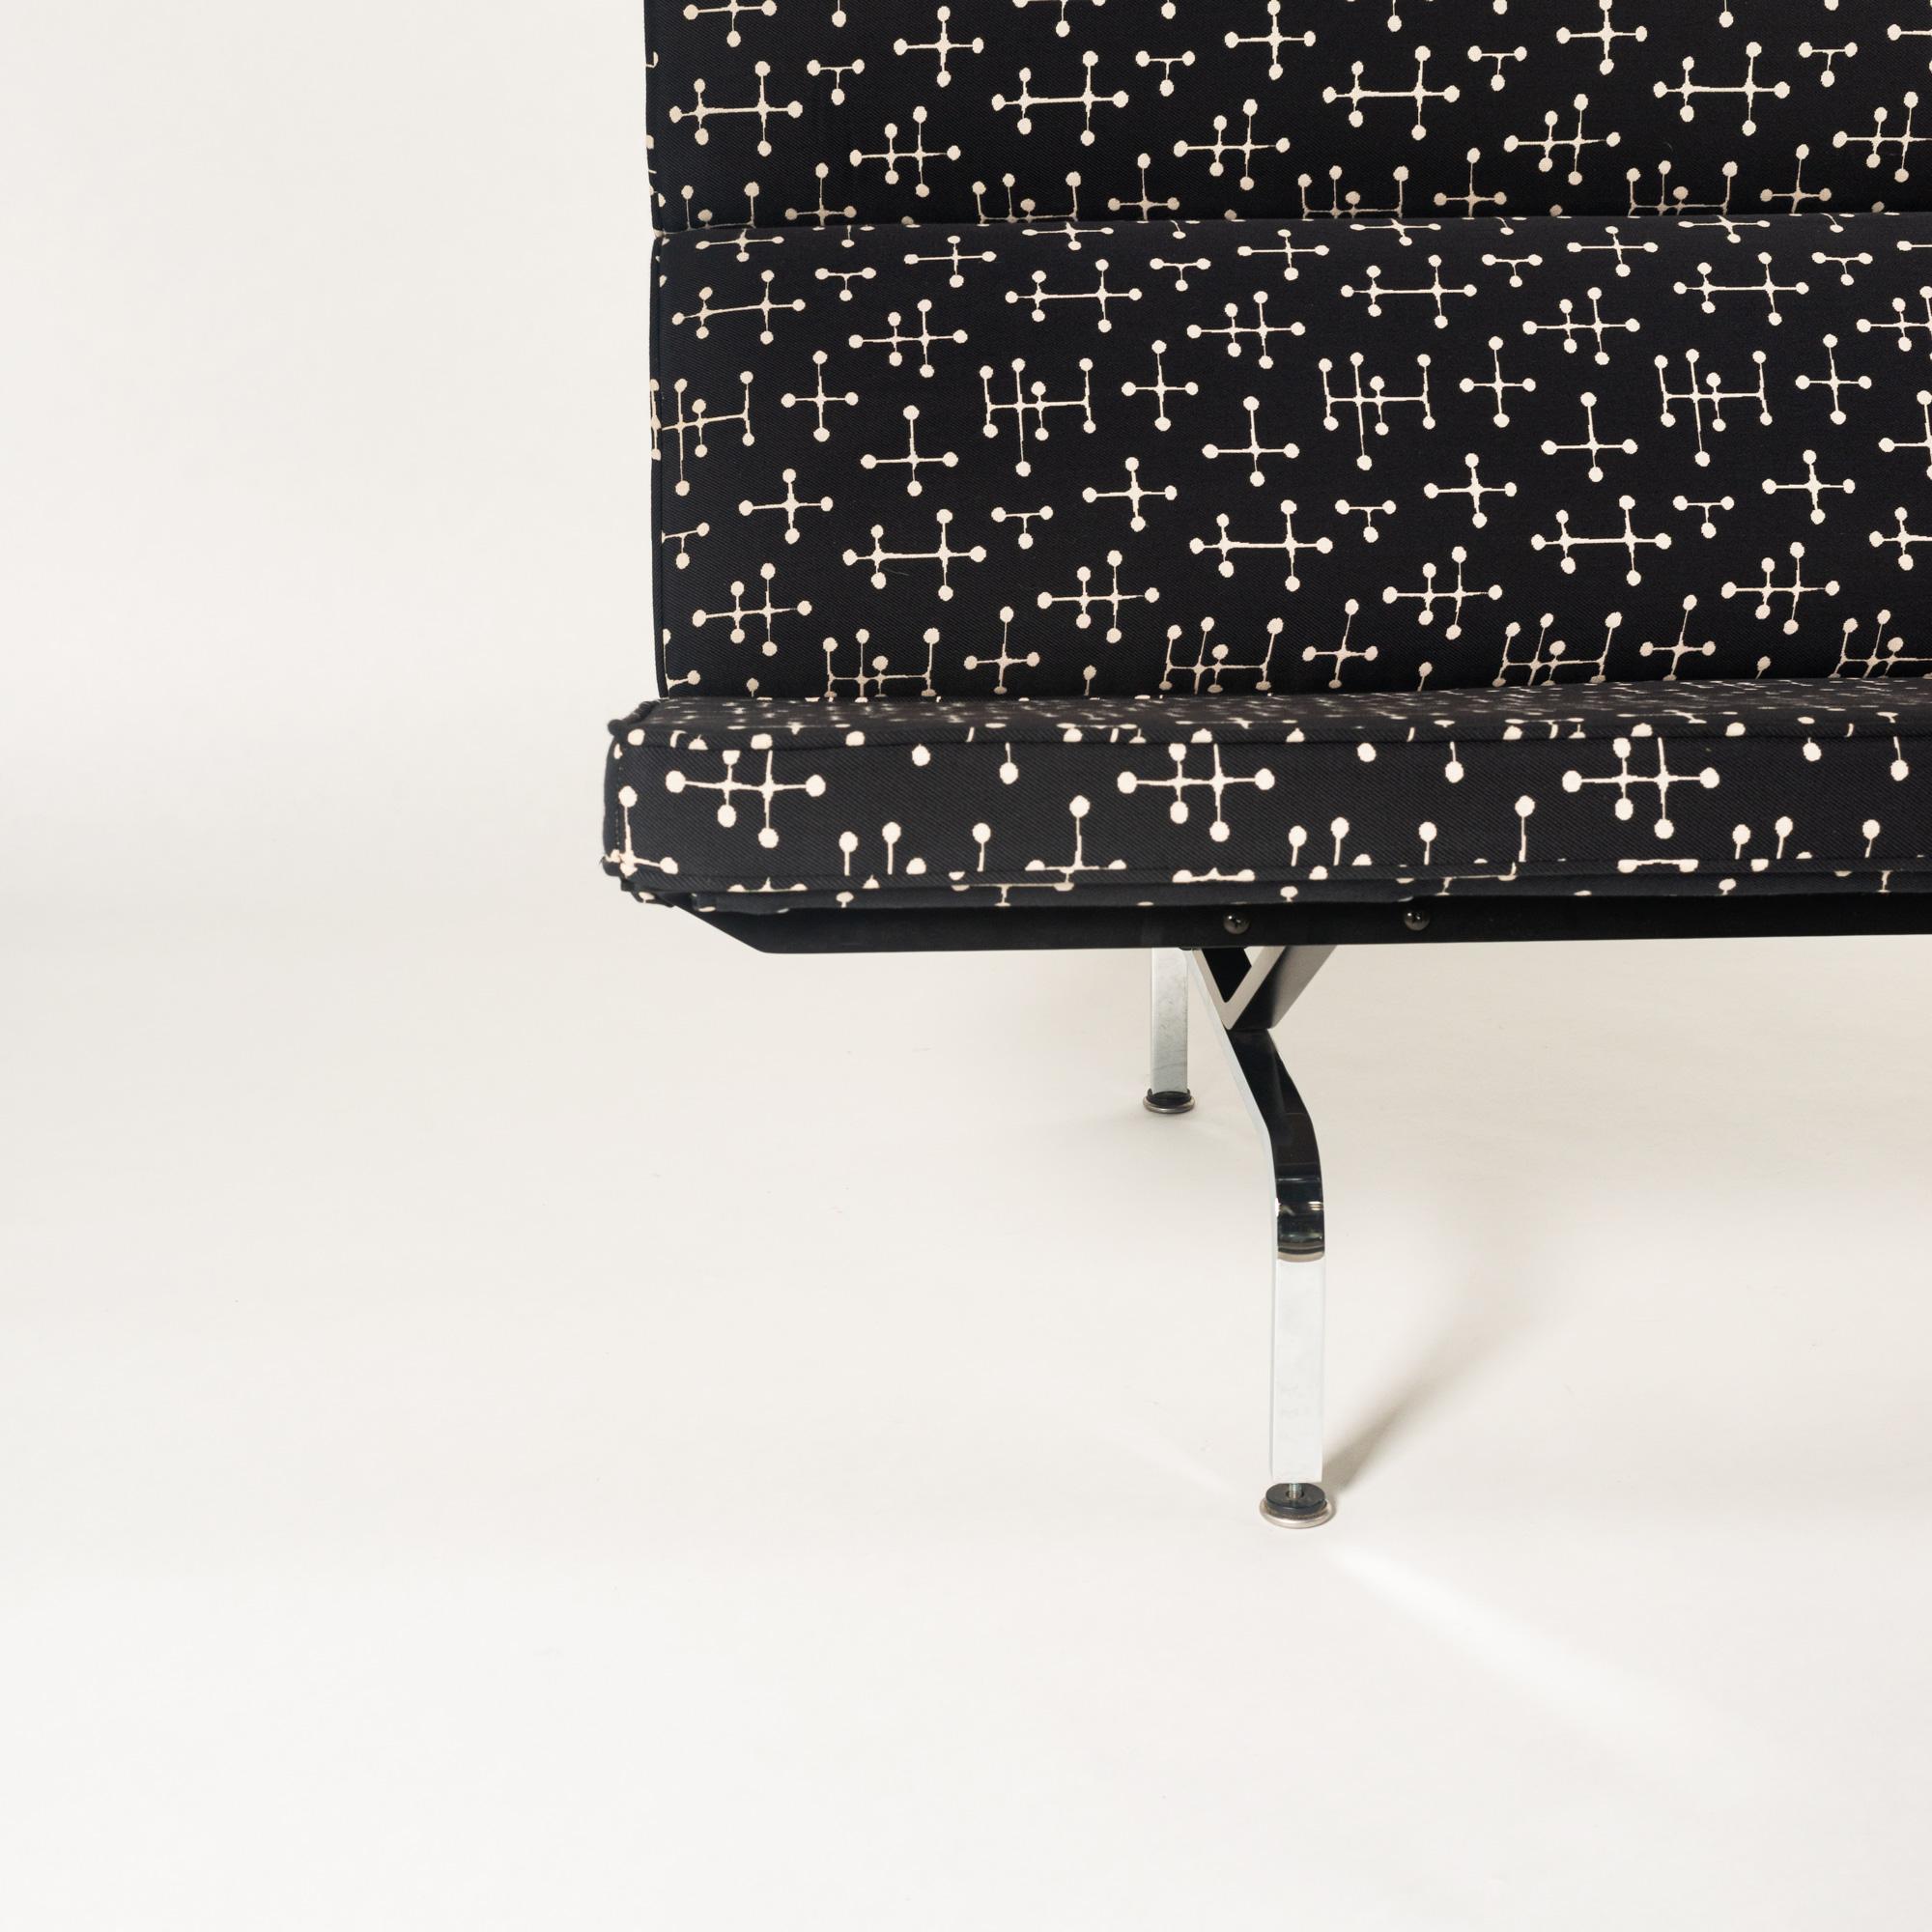 North American Eames Compact Sofa in Maharam Small Dot Pattern